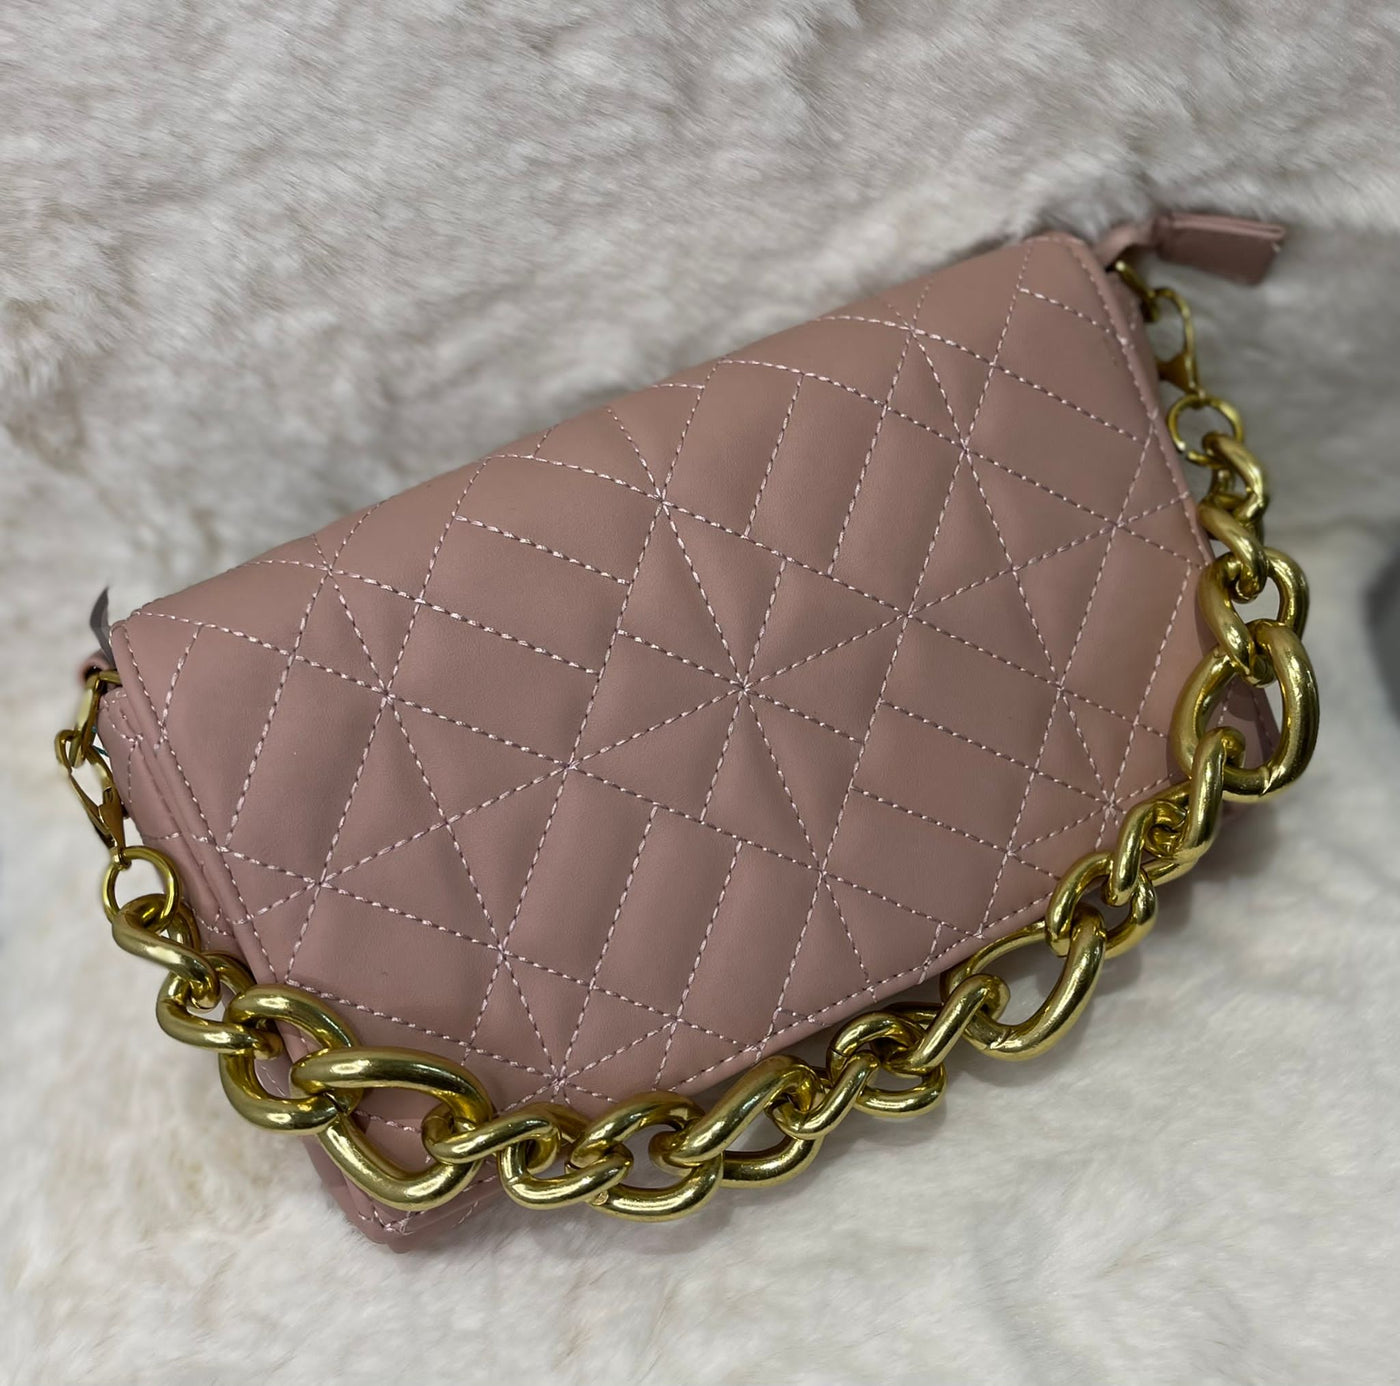 Blush stitch pattern design chunky gold handle bag